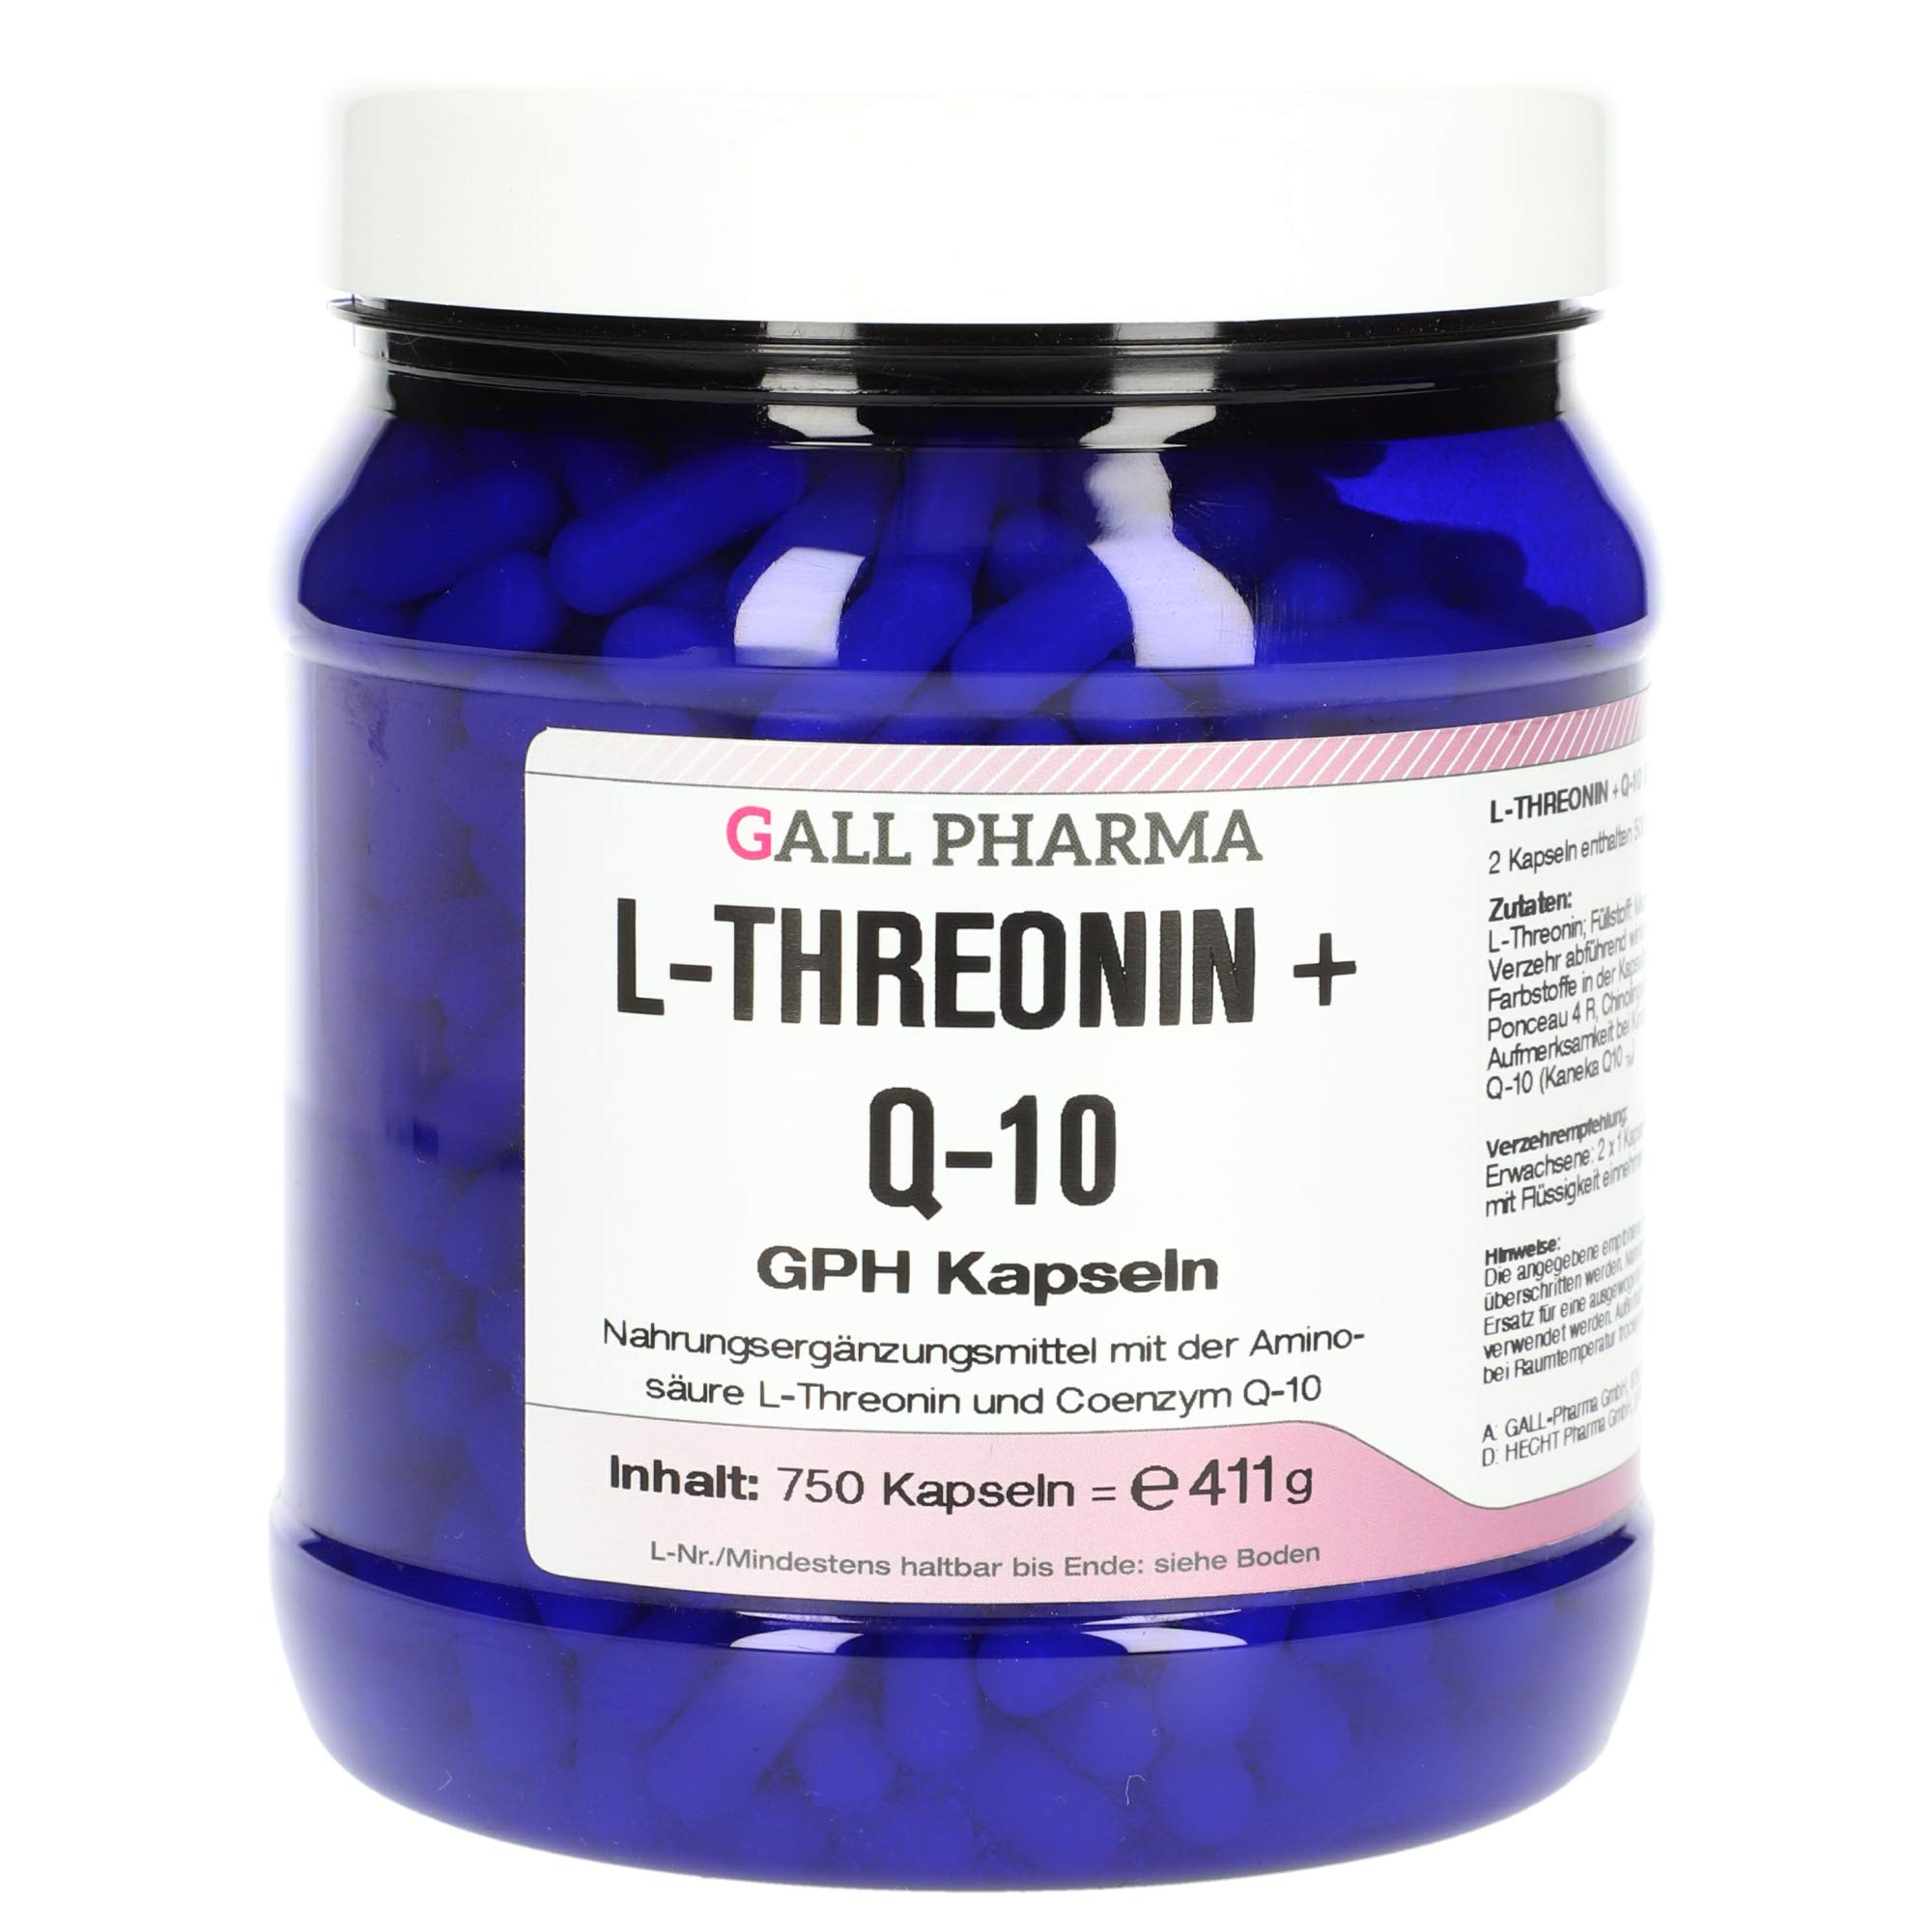 Gall Pharma L-Threonin plus Q-10 GPH Kapseln 750 Stück